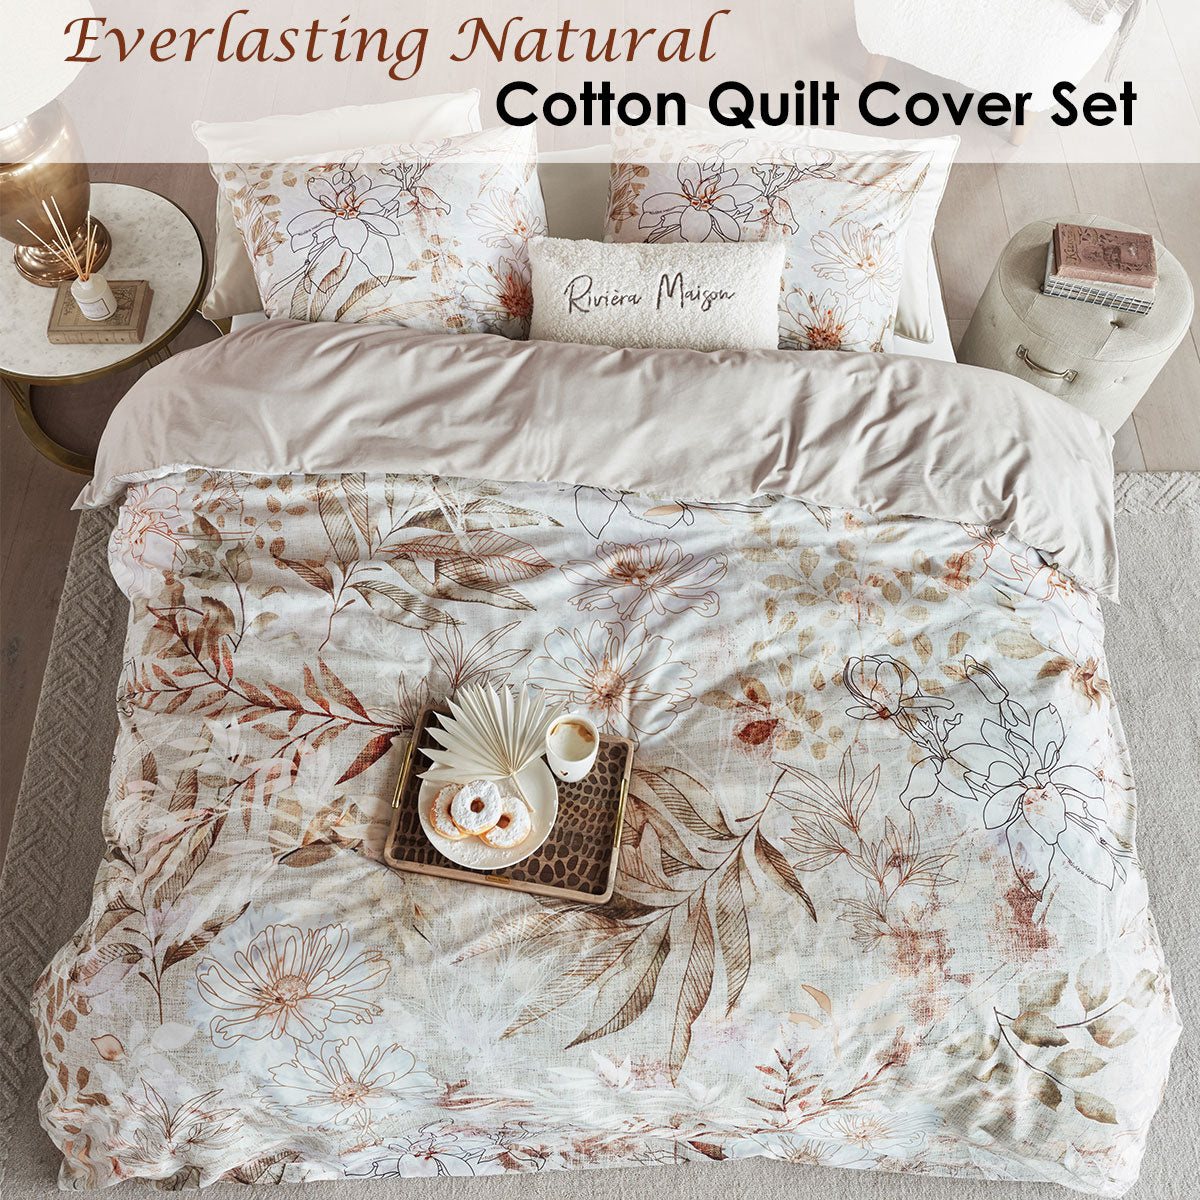 Riviera Maison Everlasting Natural Cotton Quilt Cover Set Queen